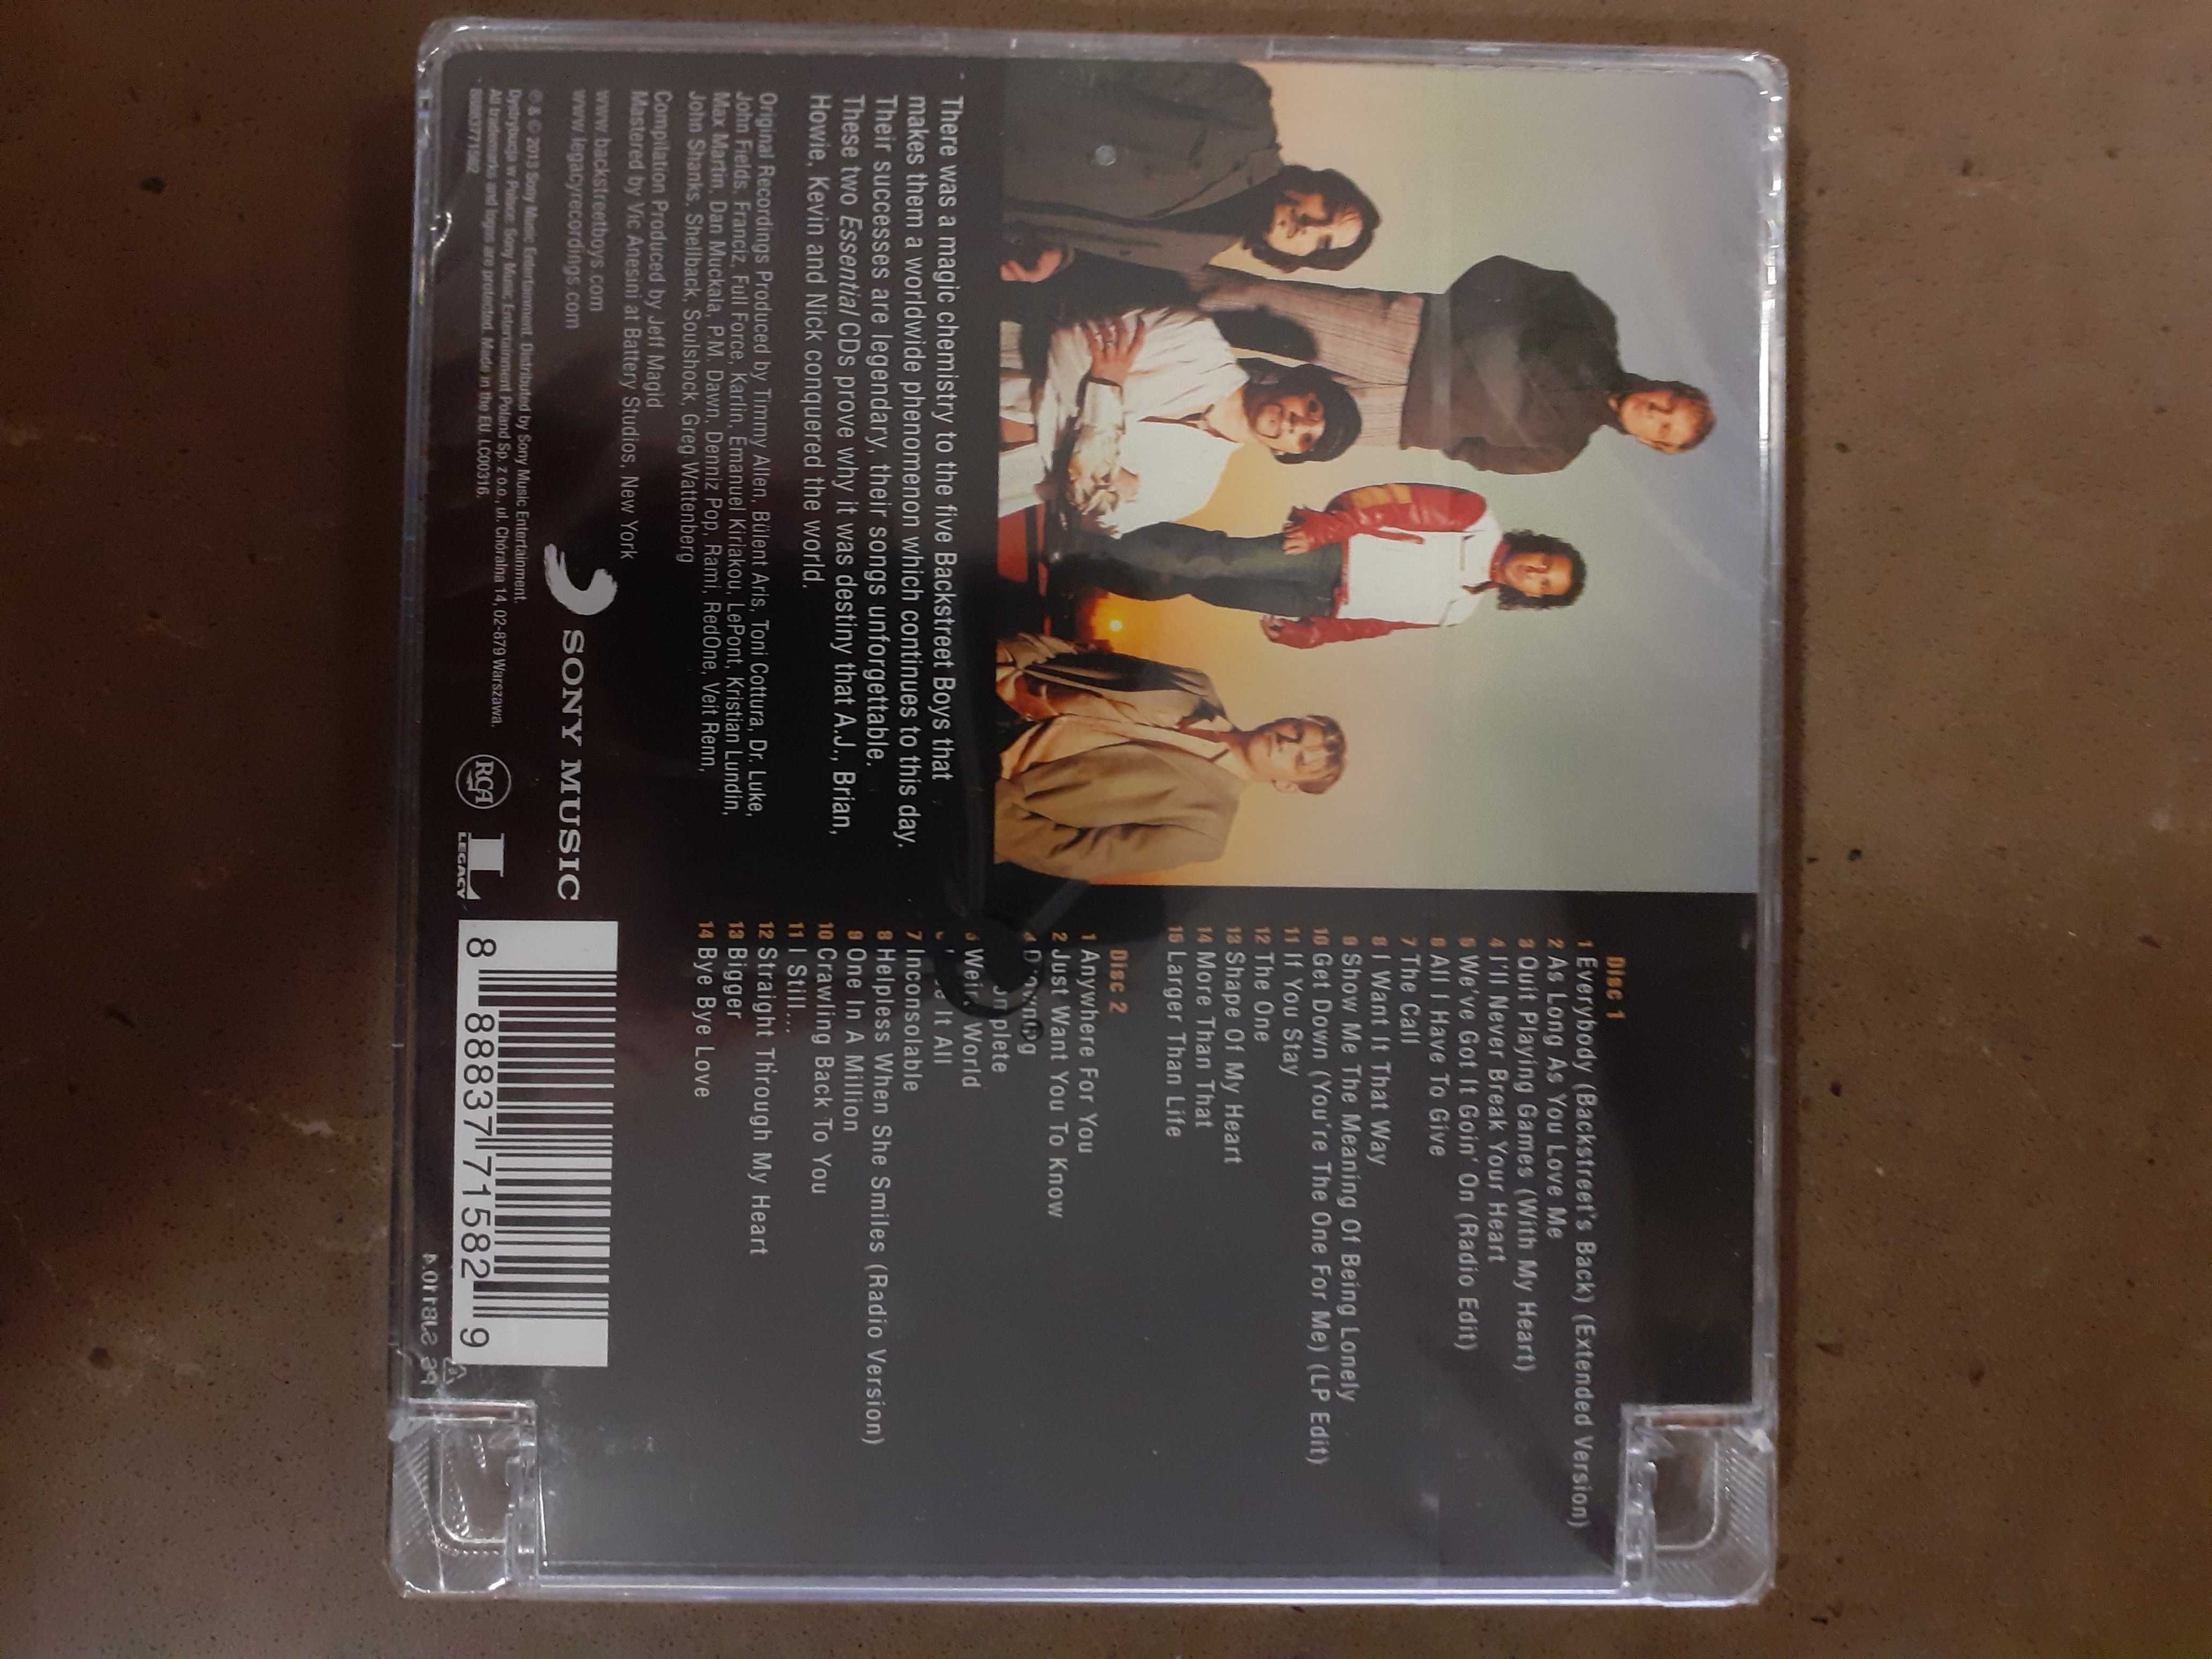 Backstreet boys cd duplo novo.